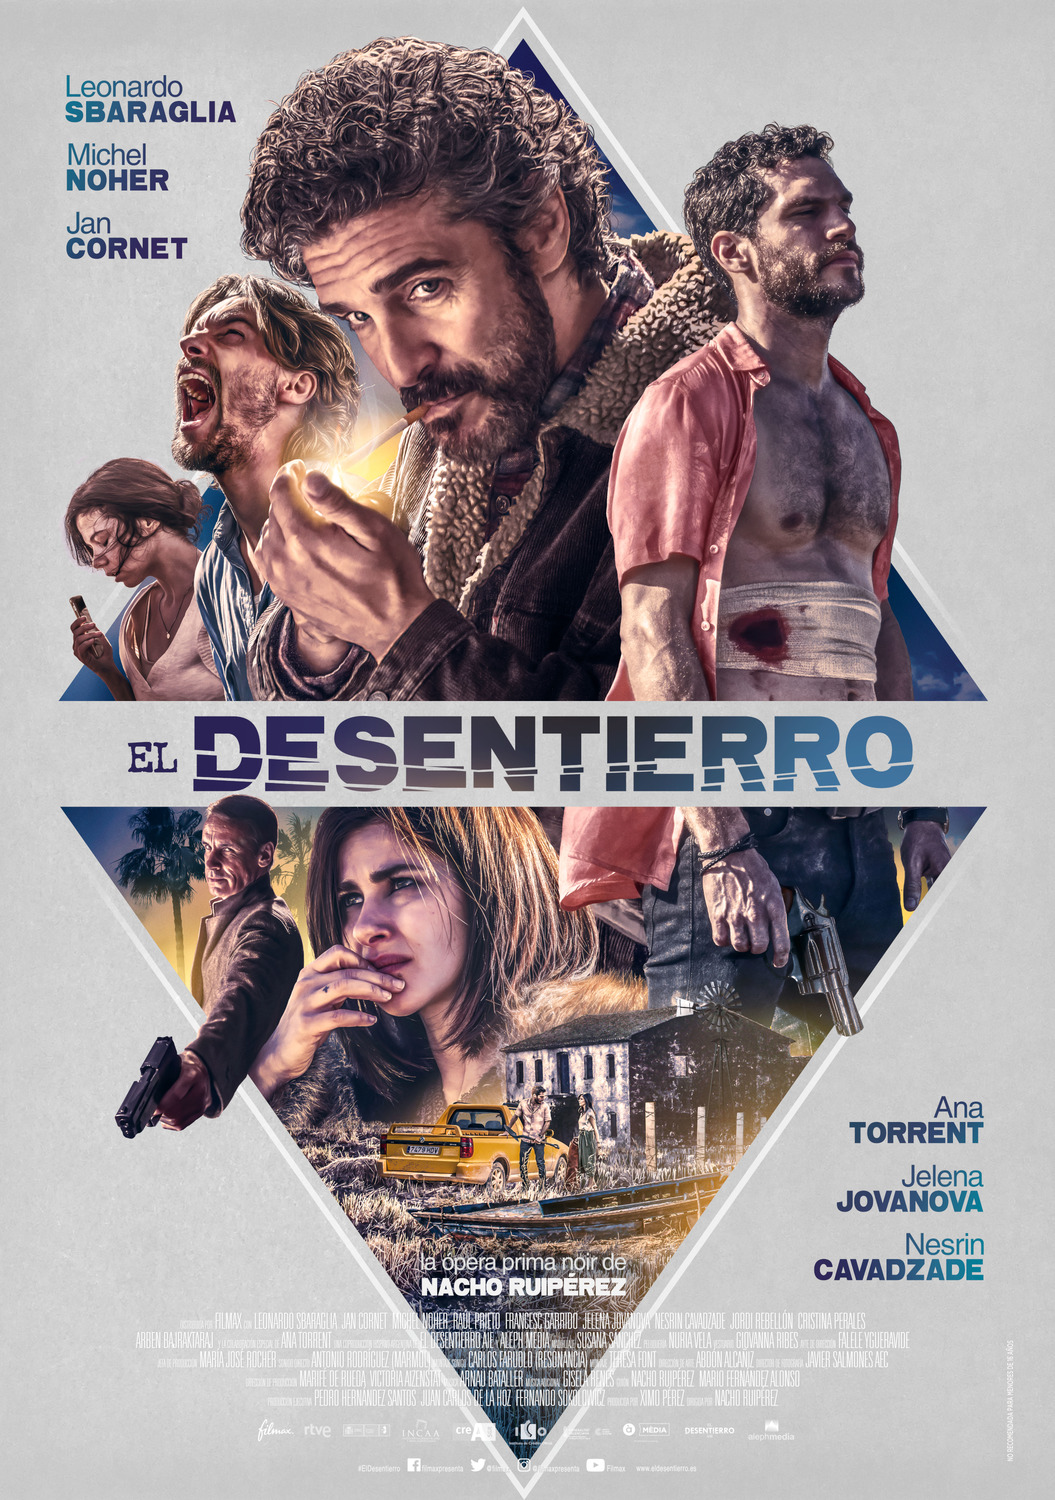 Extra Large Movie Poster Image for El desentierro 